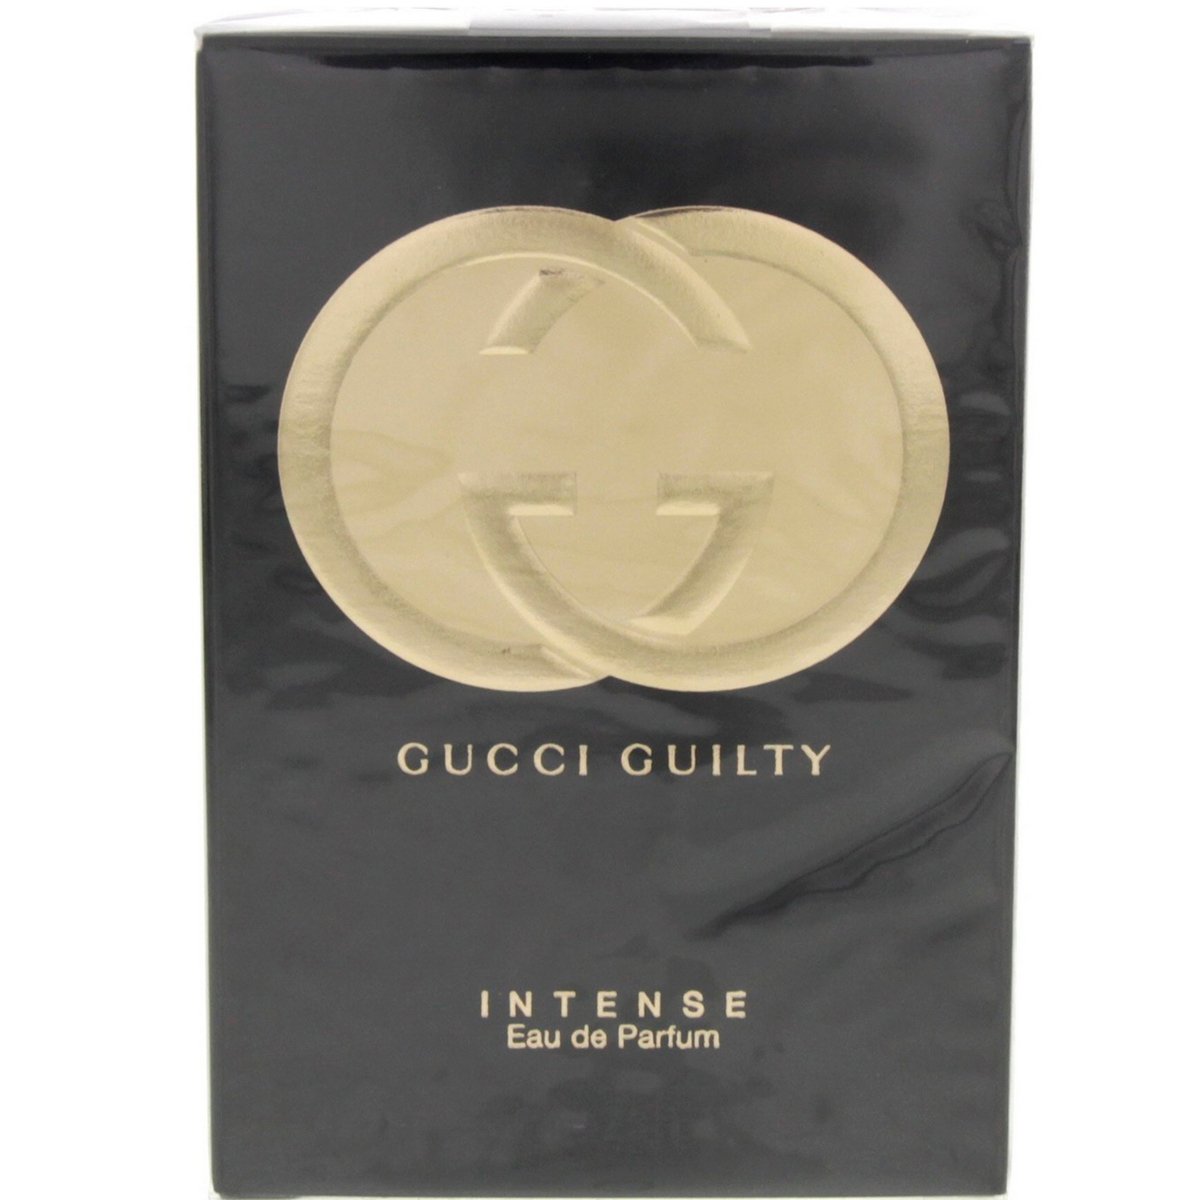 Gucci Guilty Intense EDT for Women 75ml